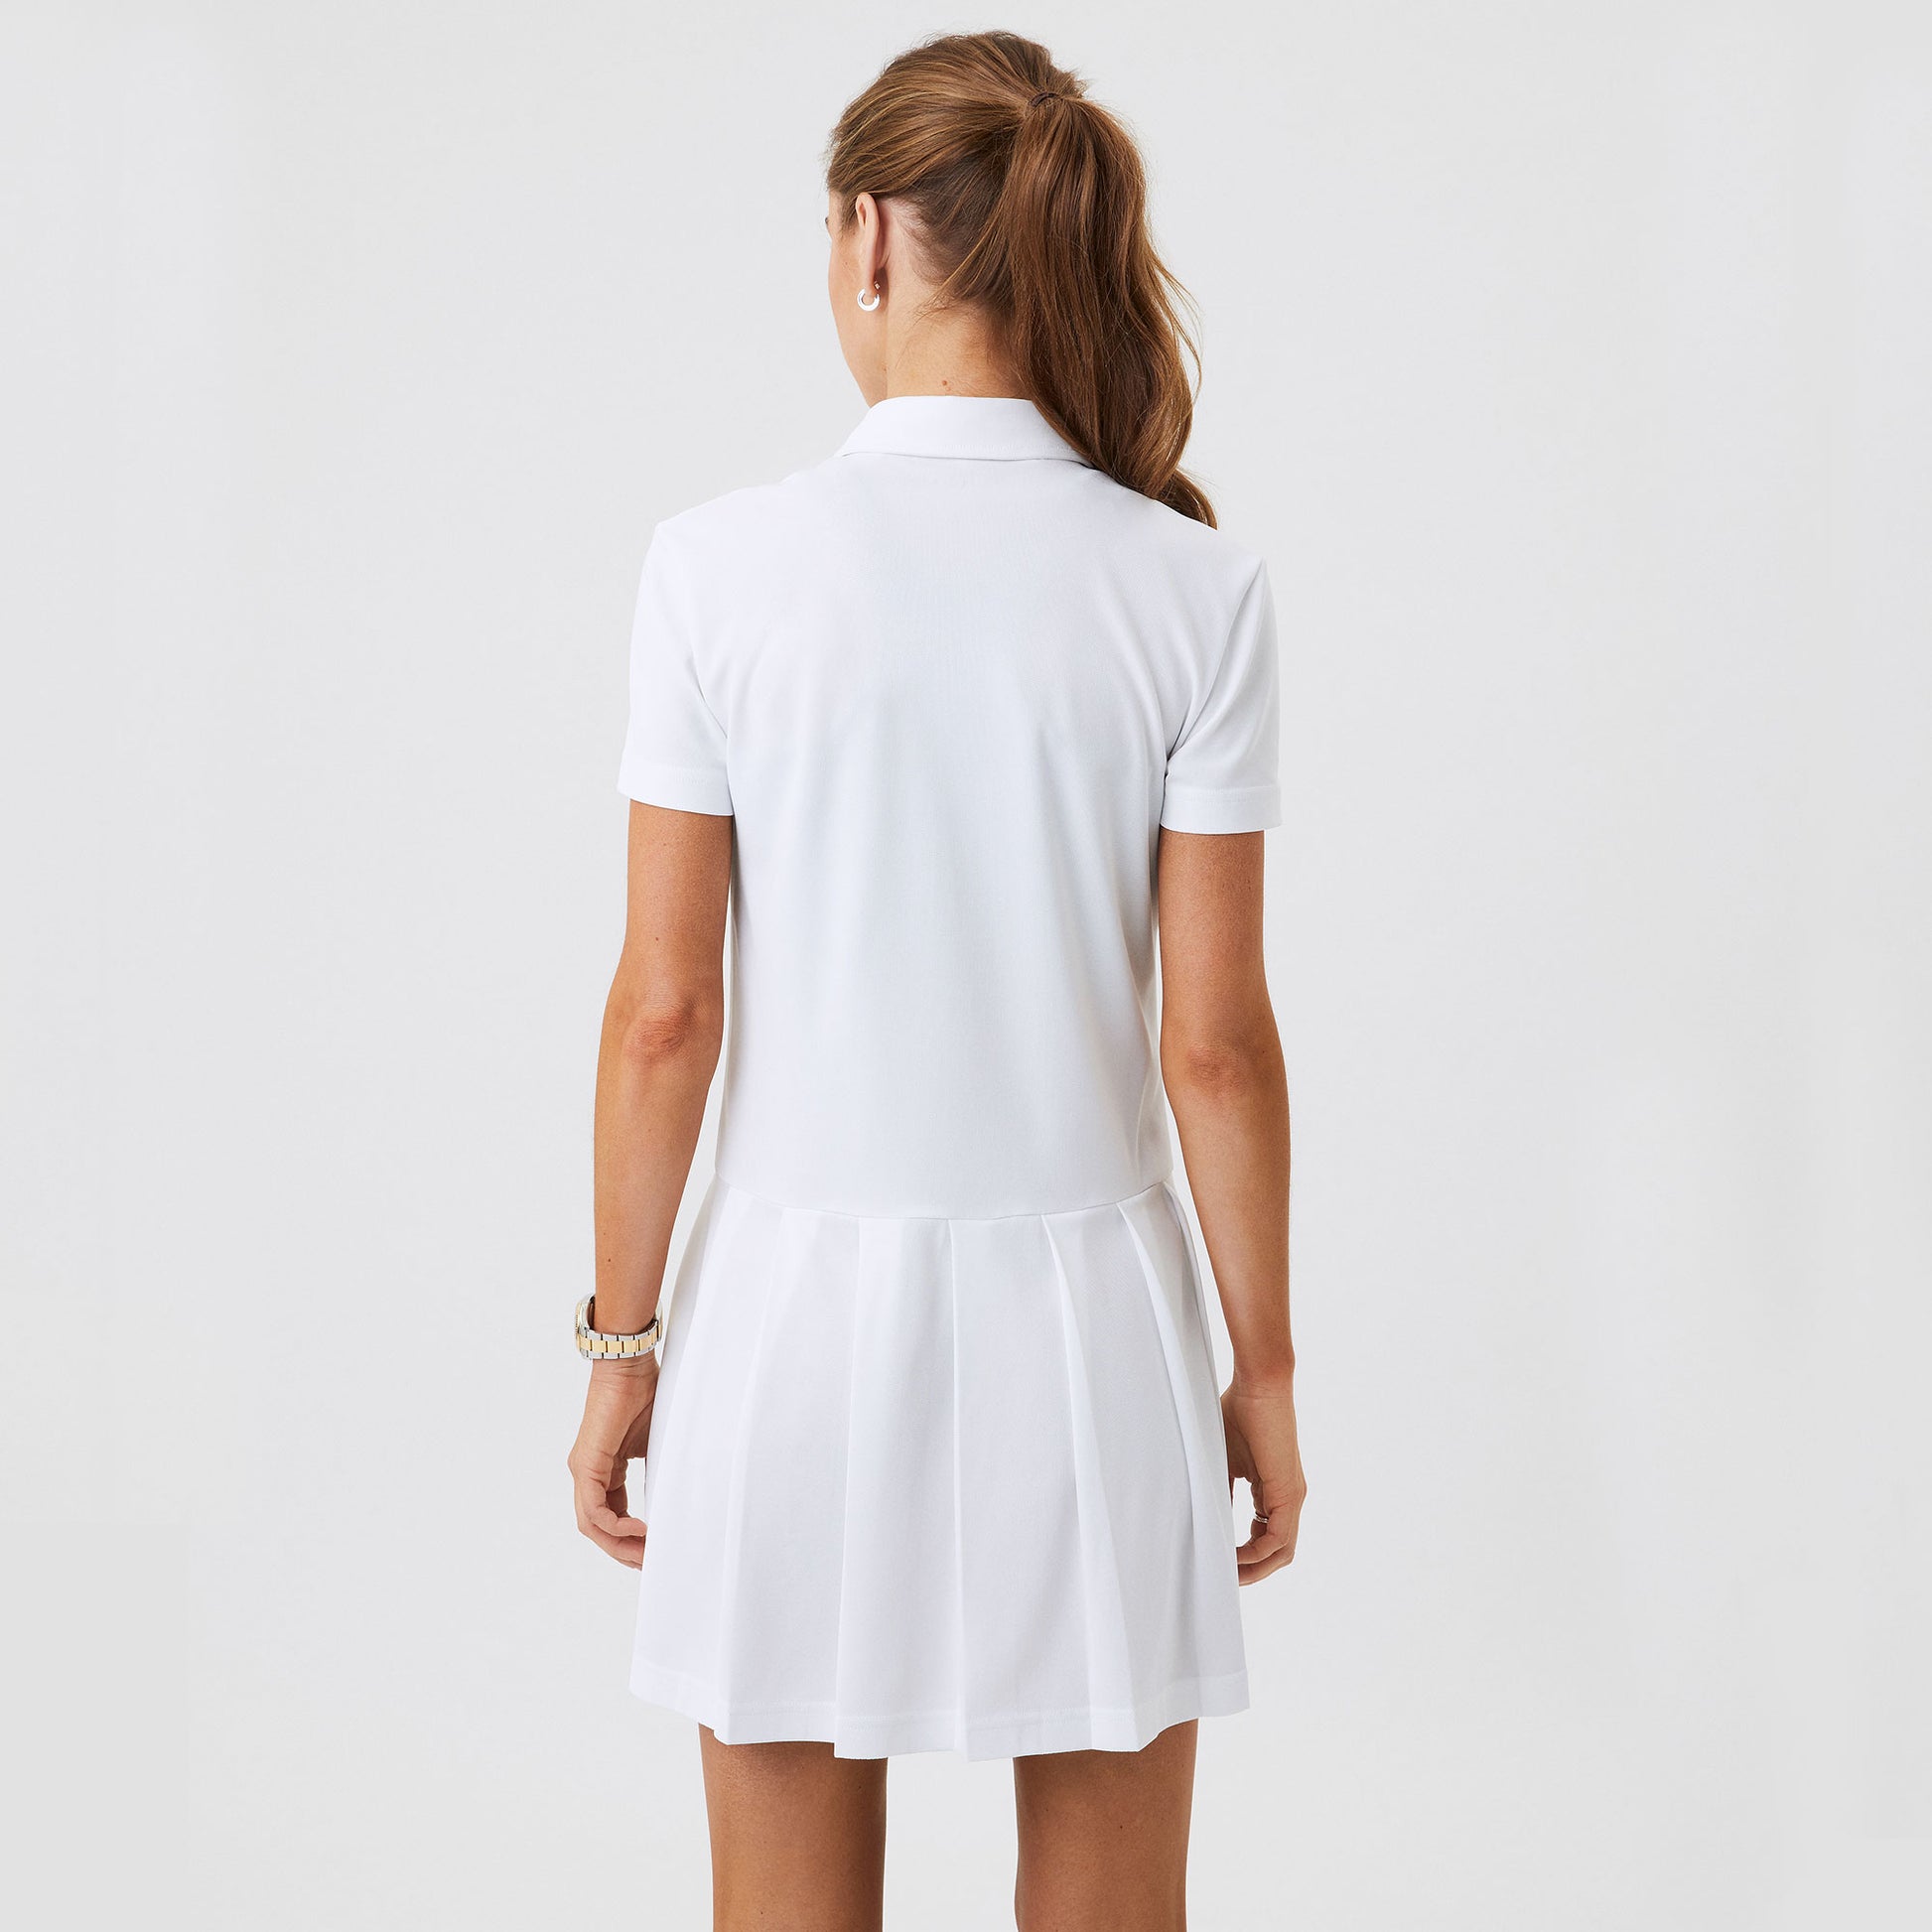 Björn Borg Ace Women's Tennis Polo Dress White (2)